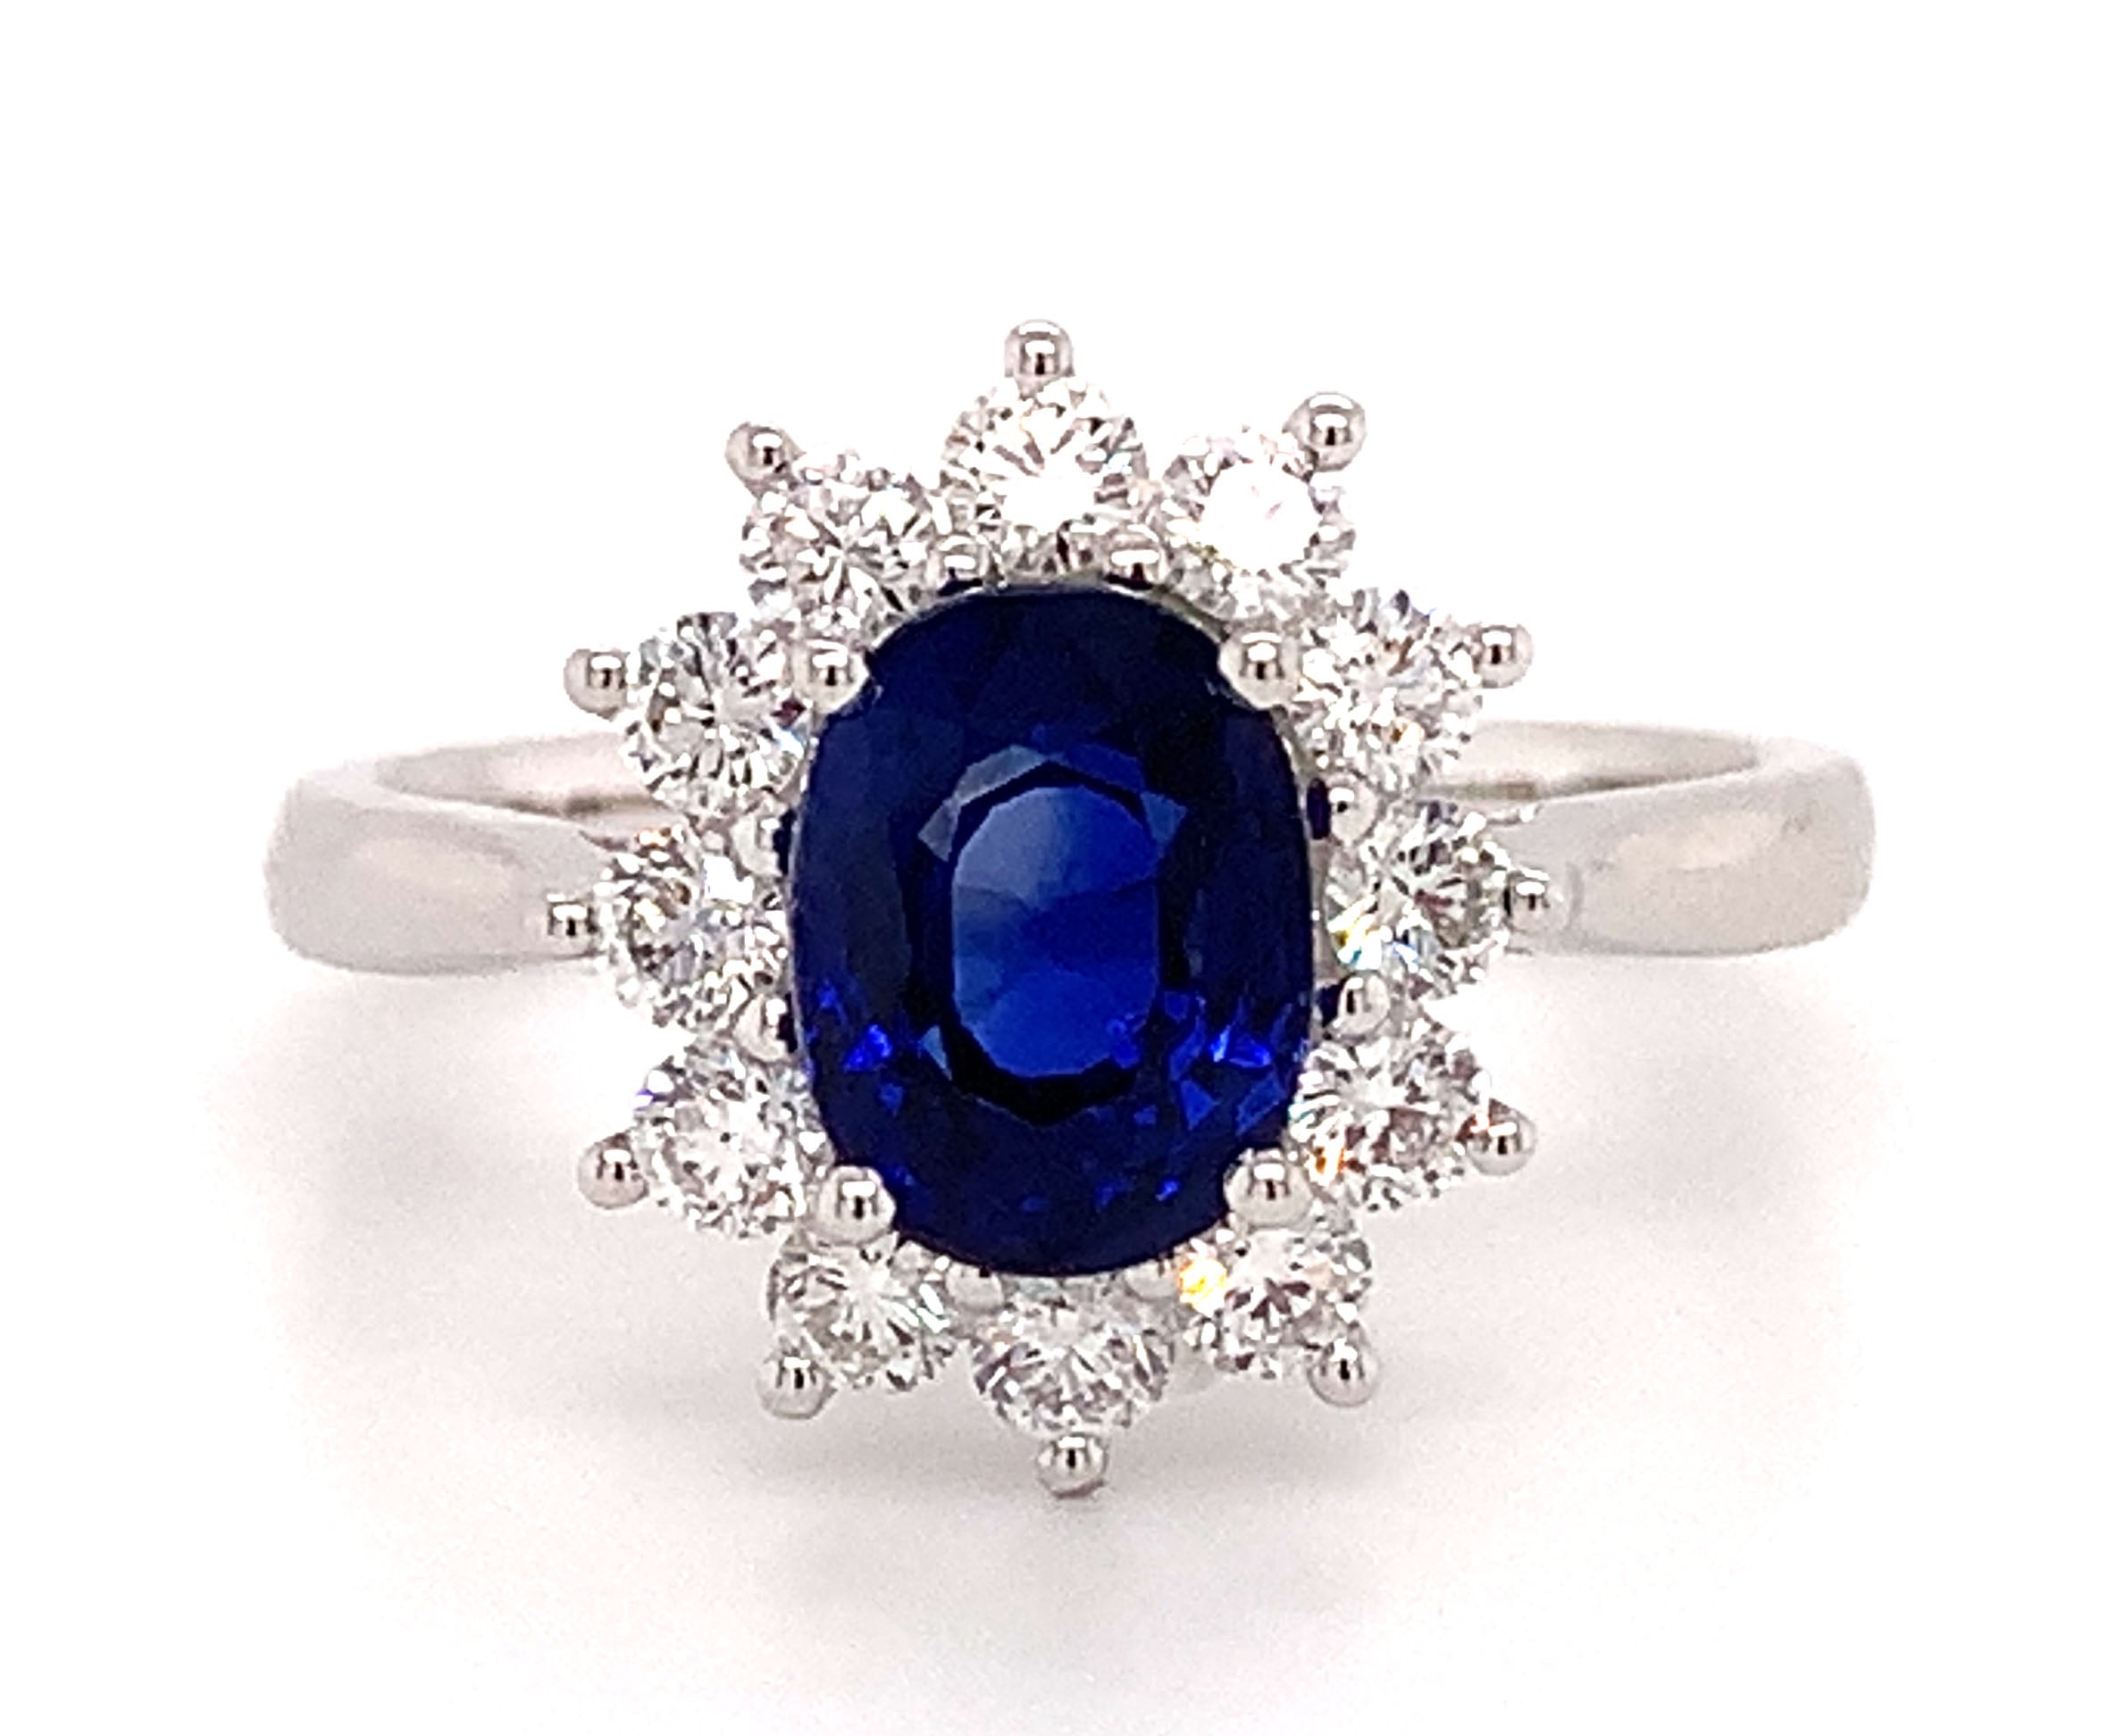 1.99ctw Royal Blue Sapphire & Diamond Ring